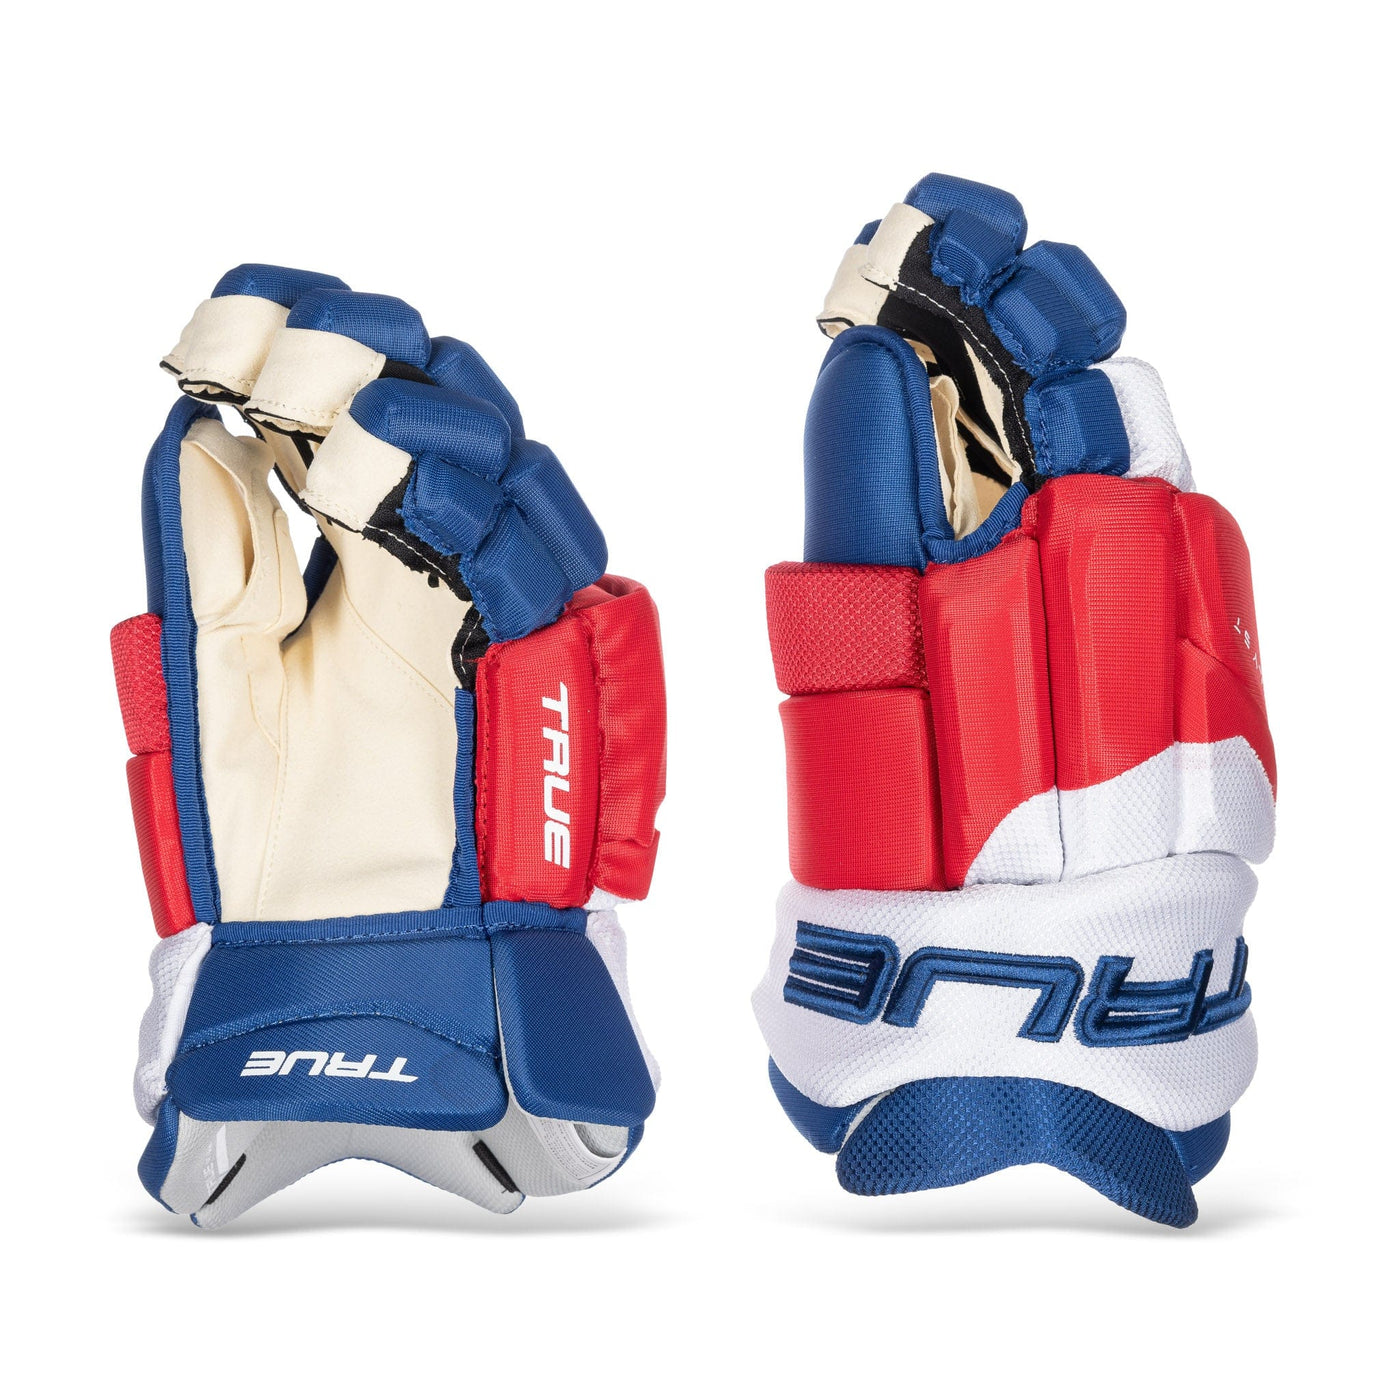 TRUE Catalyst Pro Stock Senior Hockey Glove - New York Rangers - The Hockey Shop Source For Sports